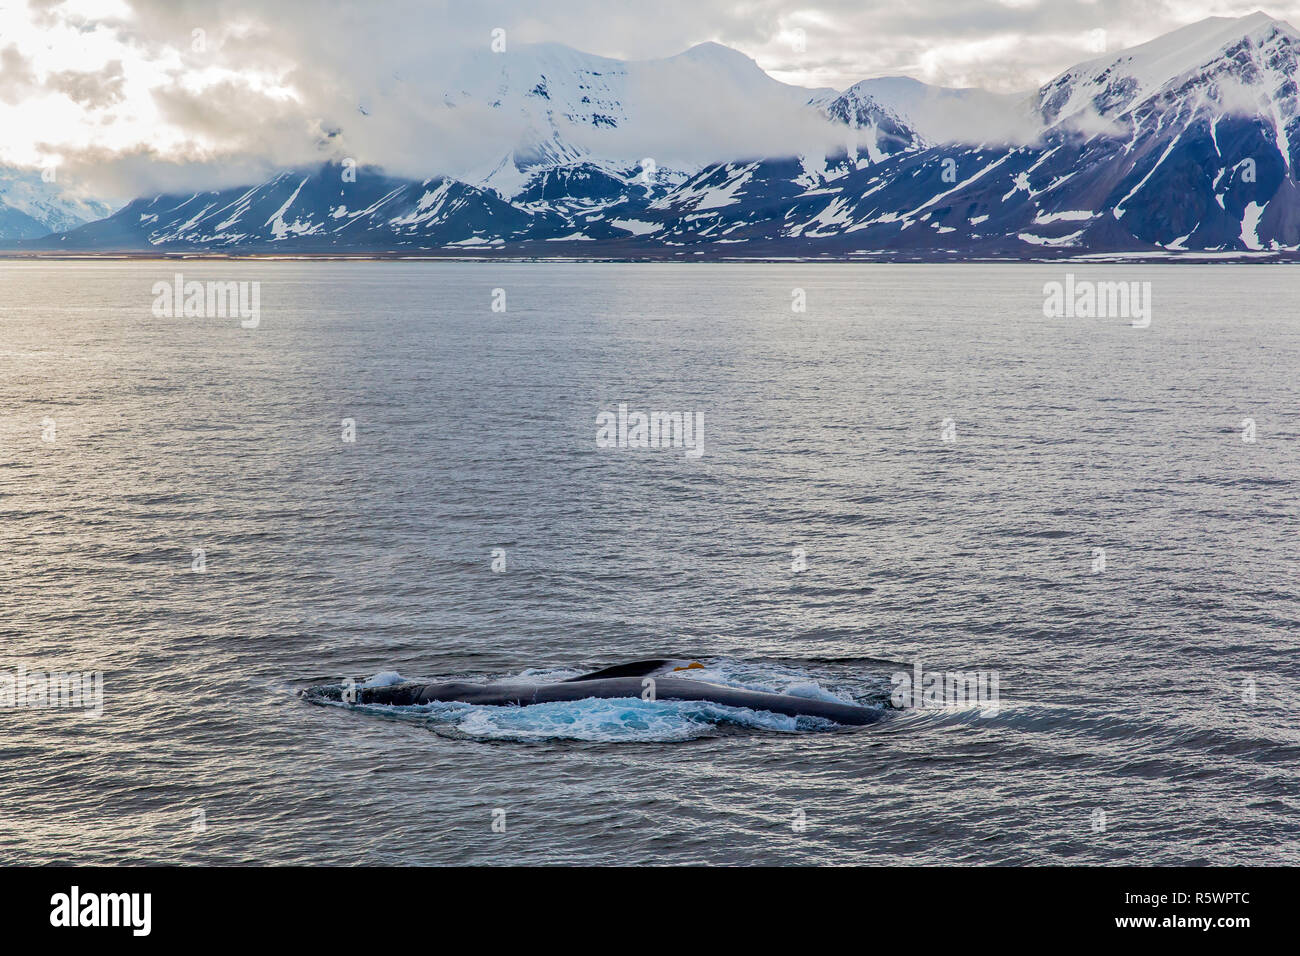 Adult blue whale, Balaenoptera musculus, sub-surface feeding off the western coast of Spitsbergen, Svalbard Archipelago, Norway. Stock Photo